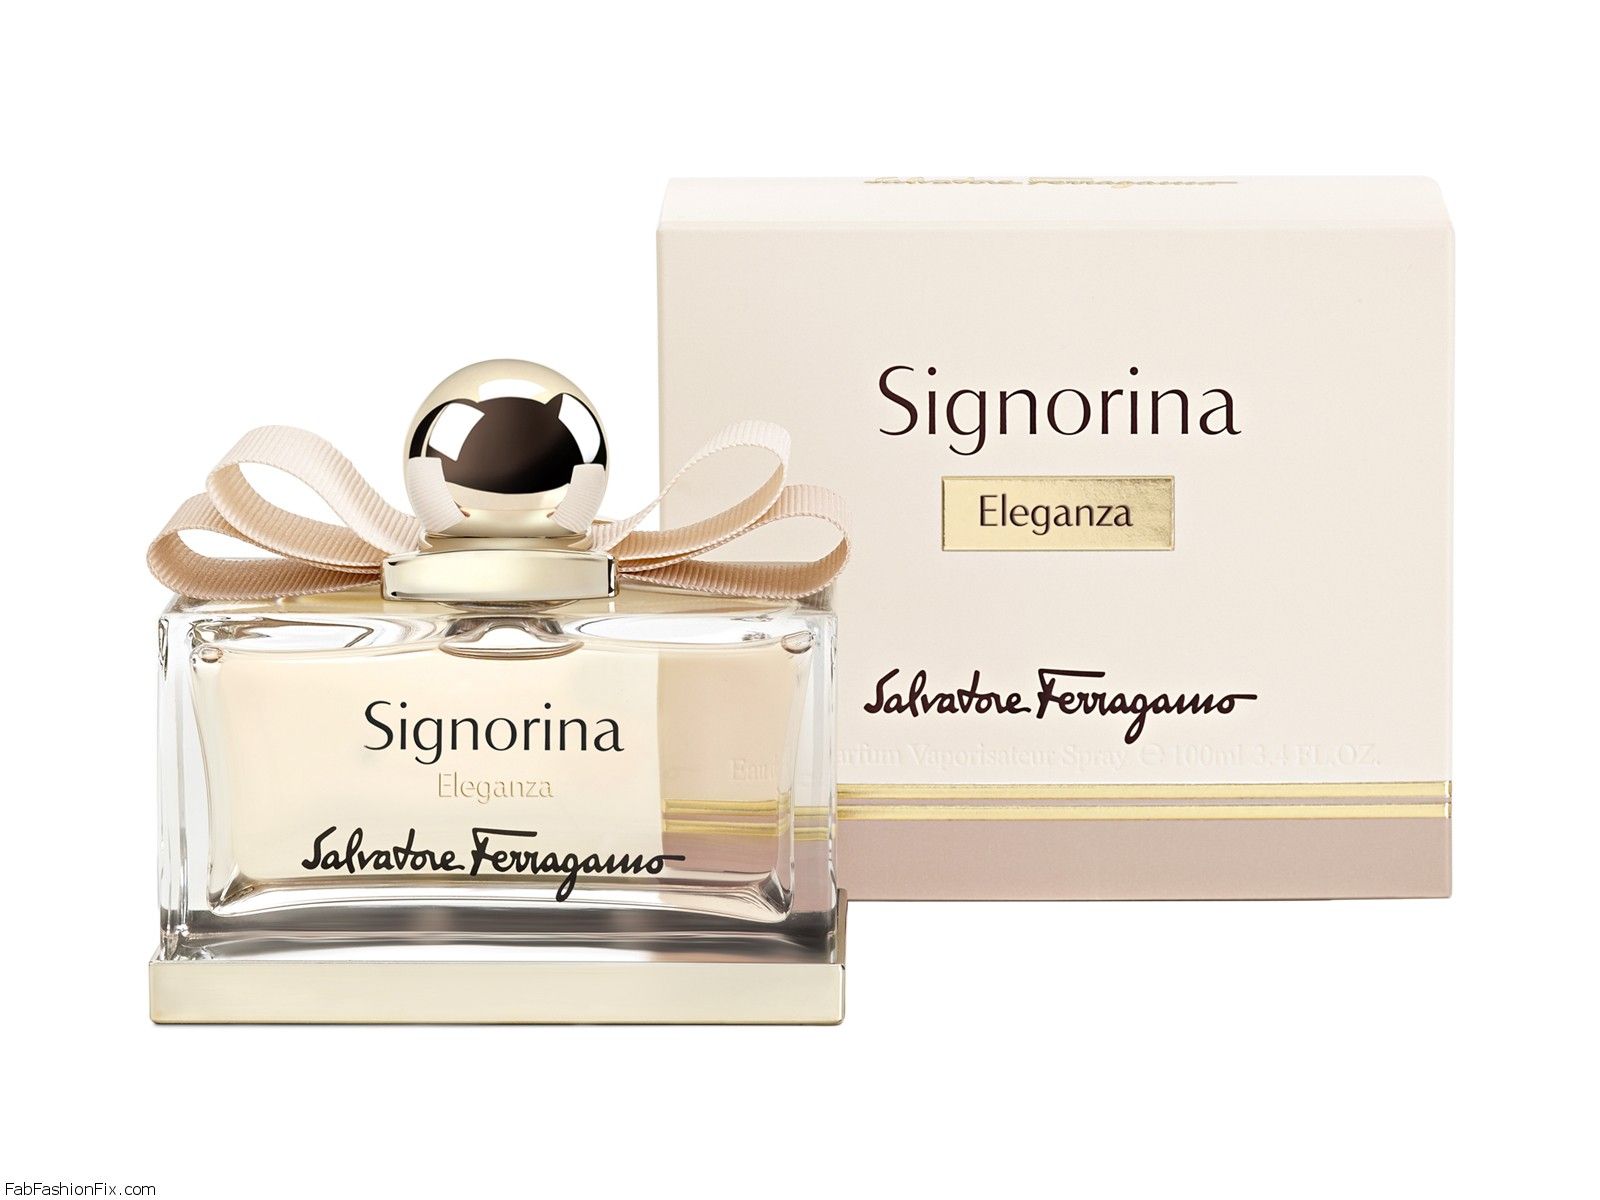 Introducing the Salvatore Ferragamo "Signorina Eleganza" Fragrance